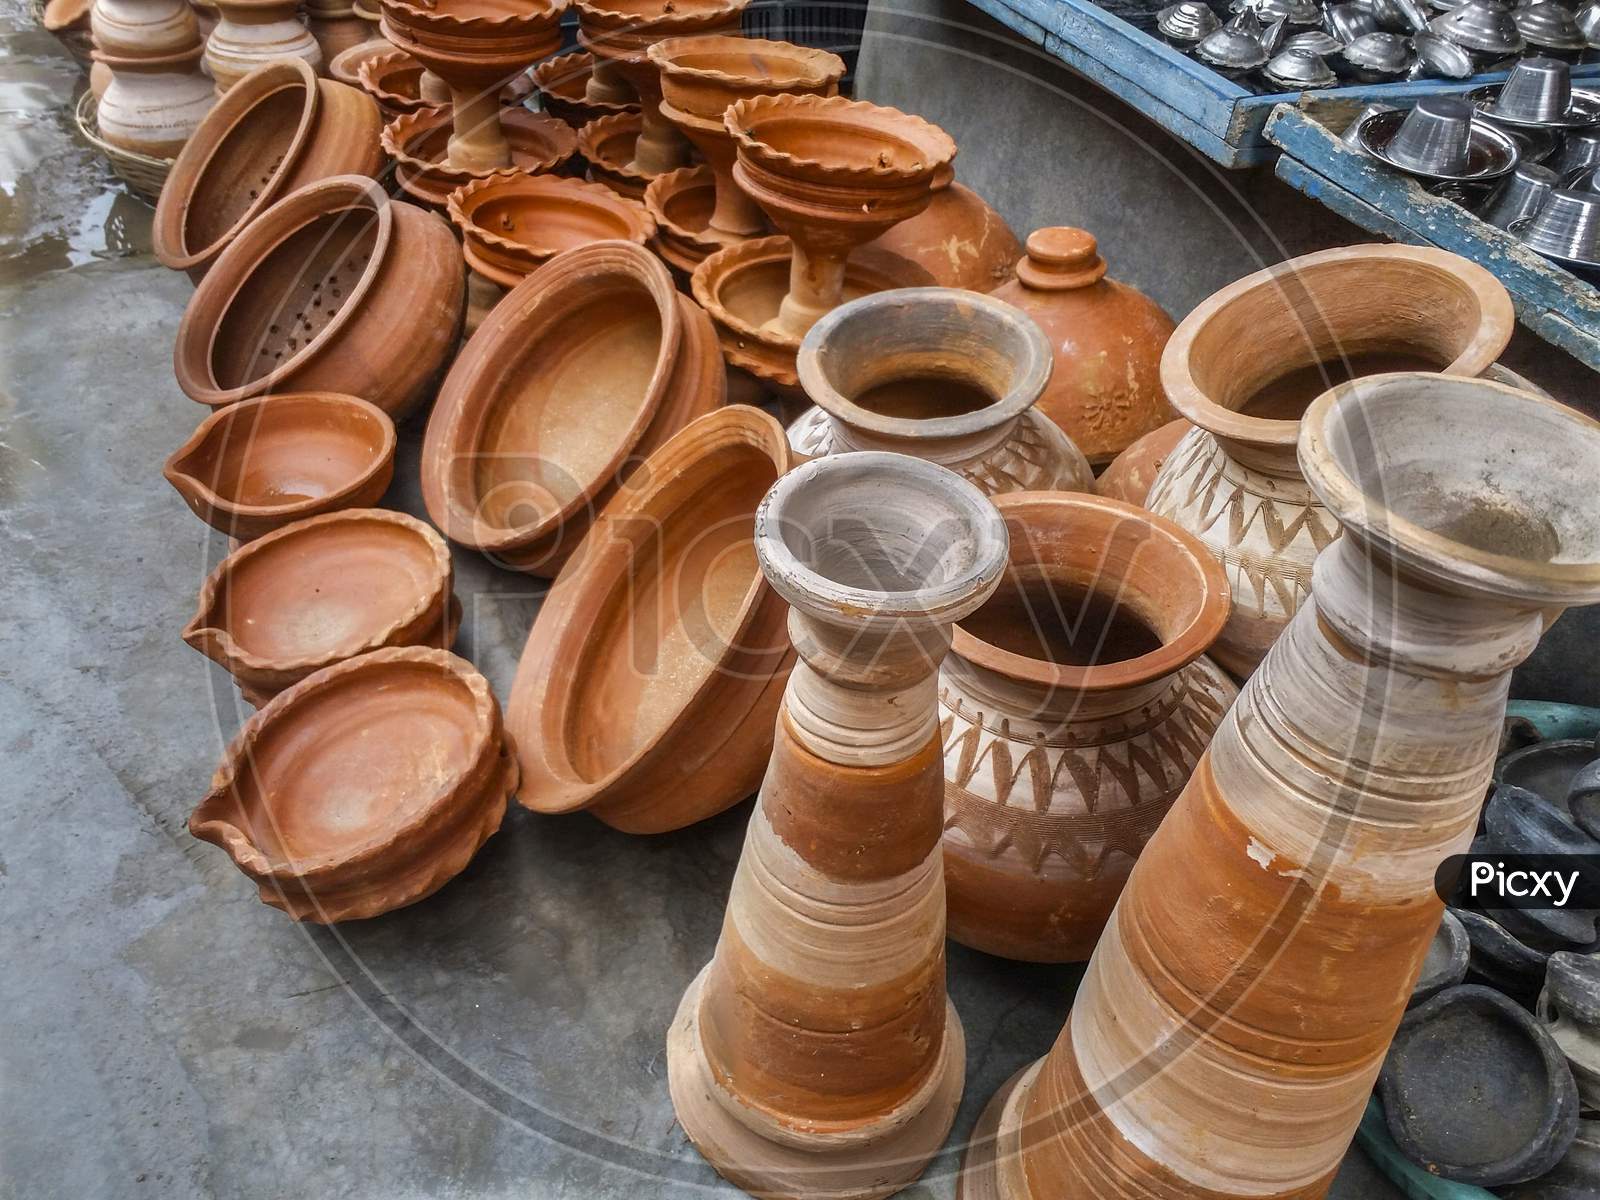 The showcase of handmade ceramic pottery in a roadside market